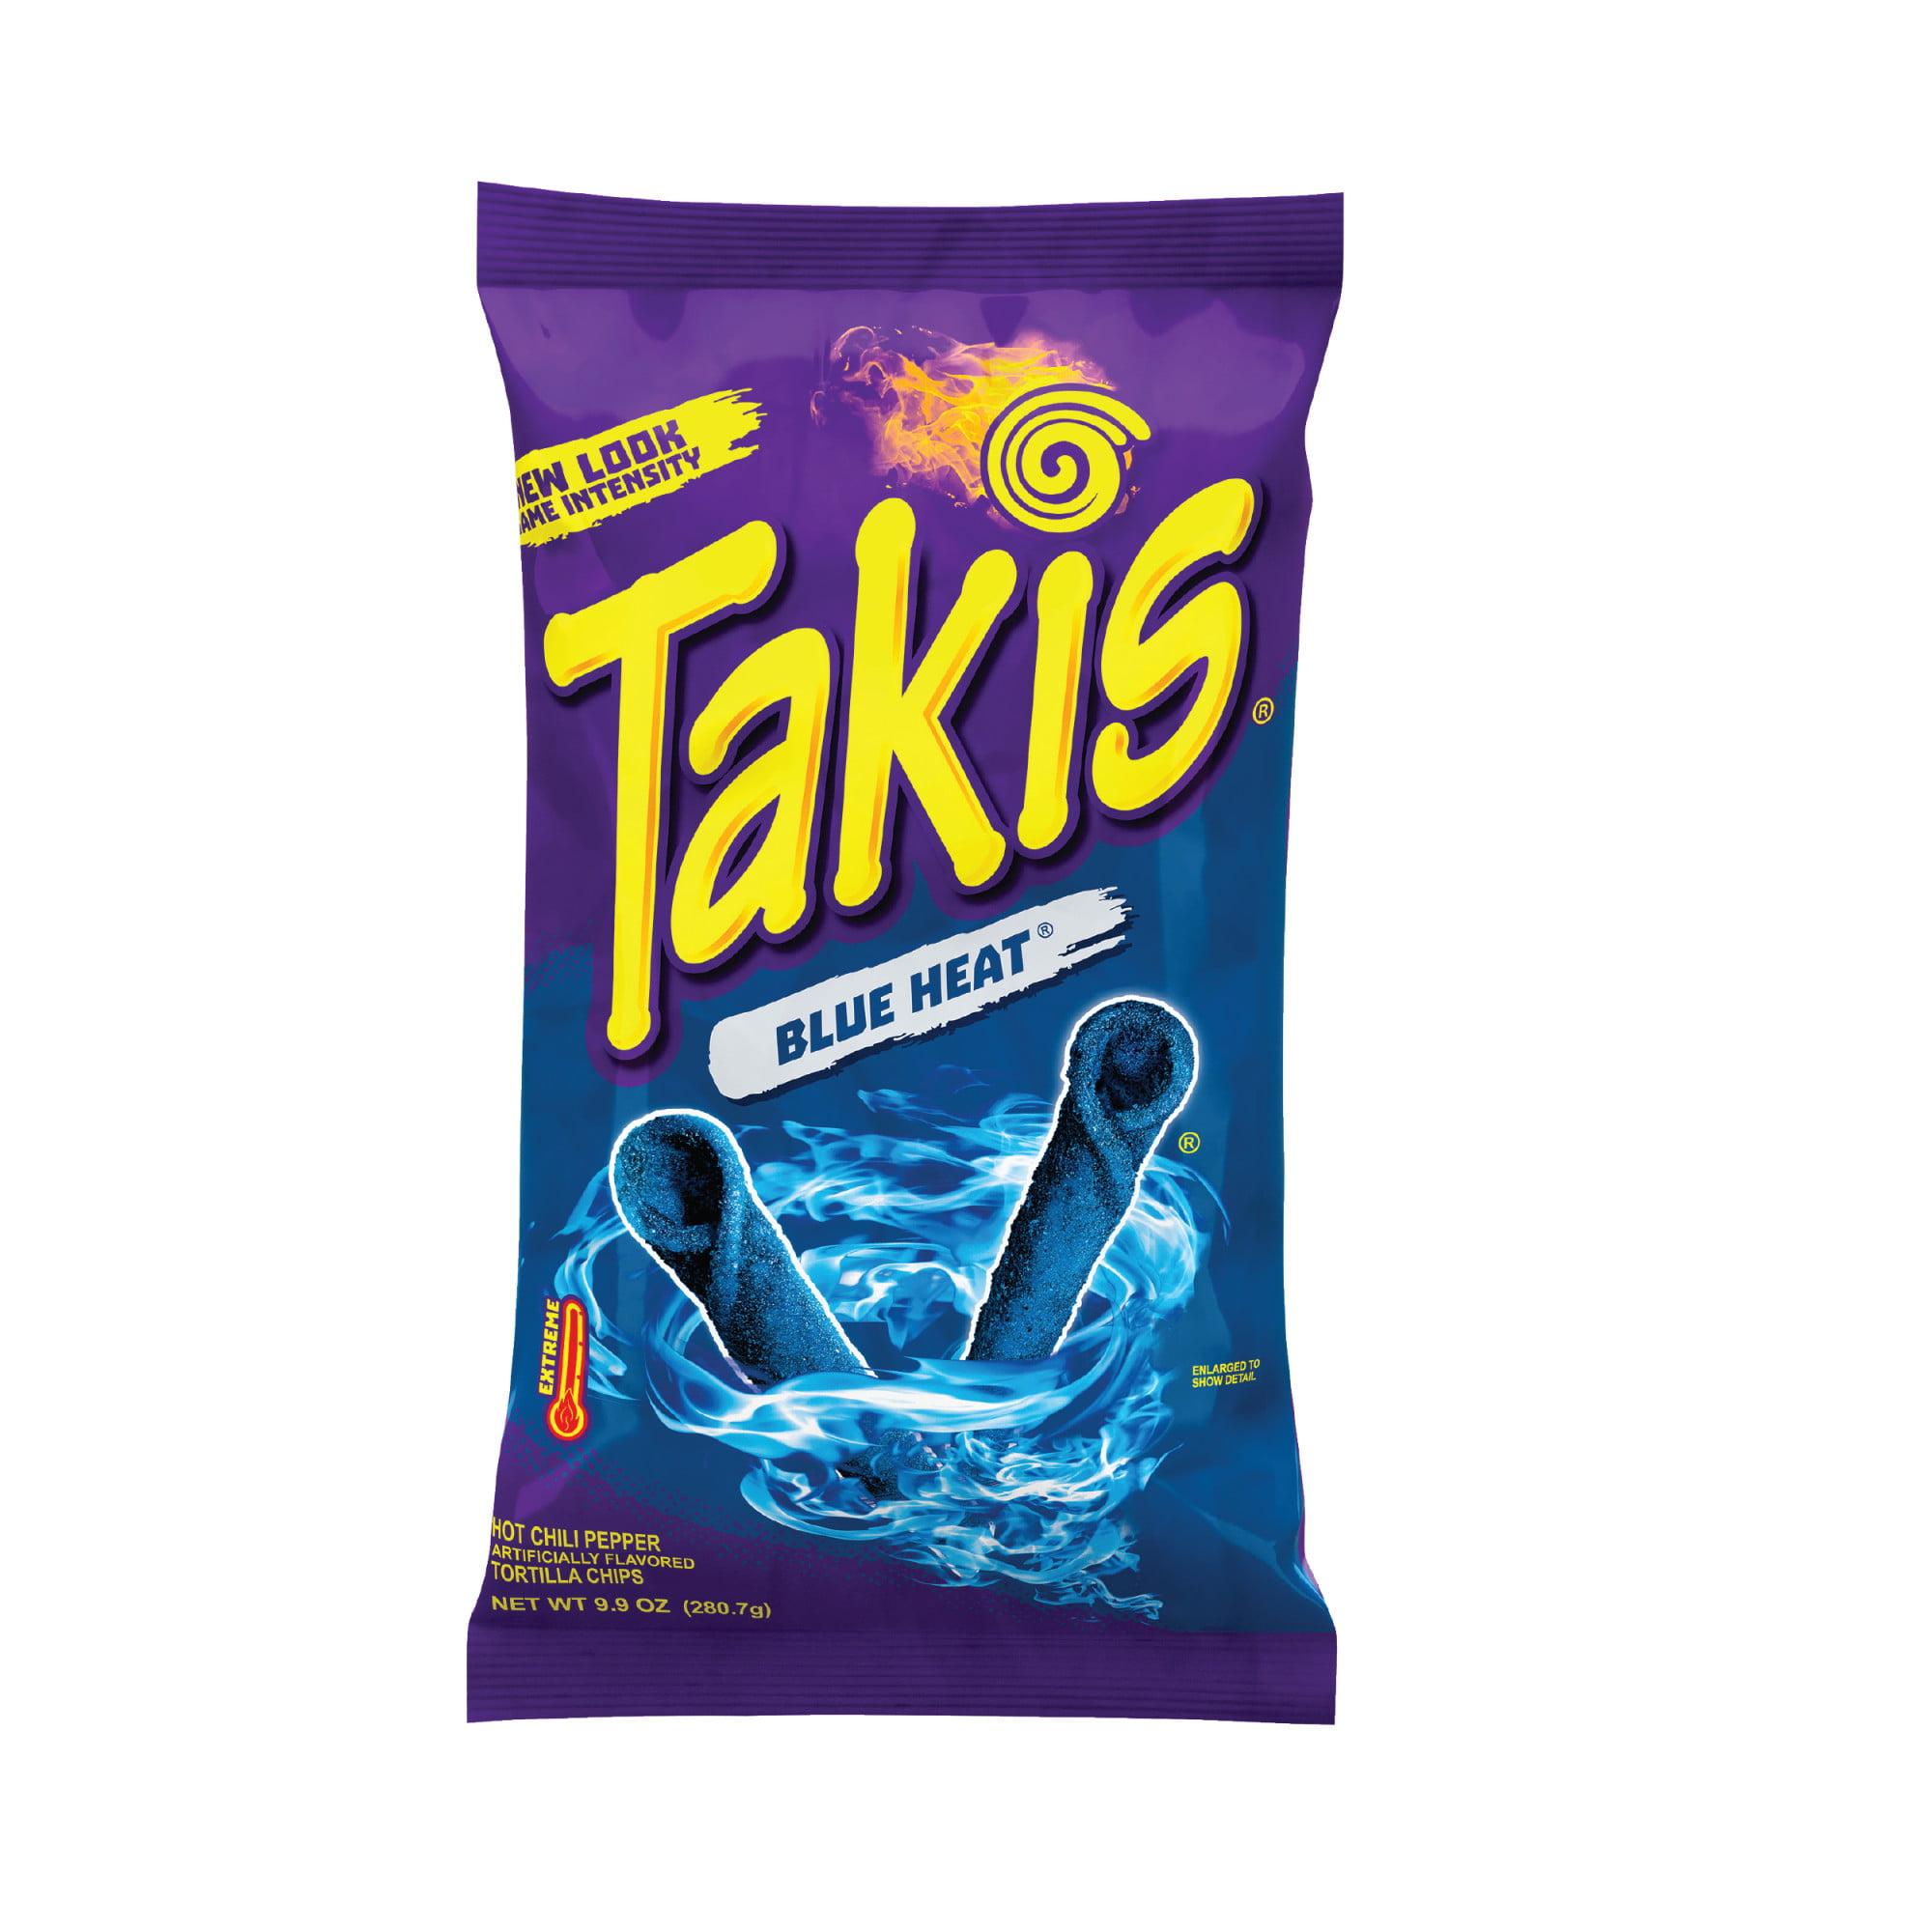 Takis Blue Heat Rolls 99 oz Bag Hot Chili Pepper Flavored Spicy